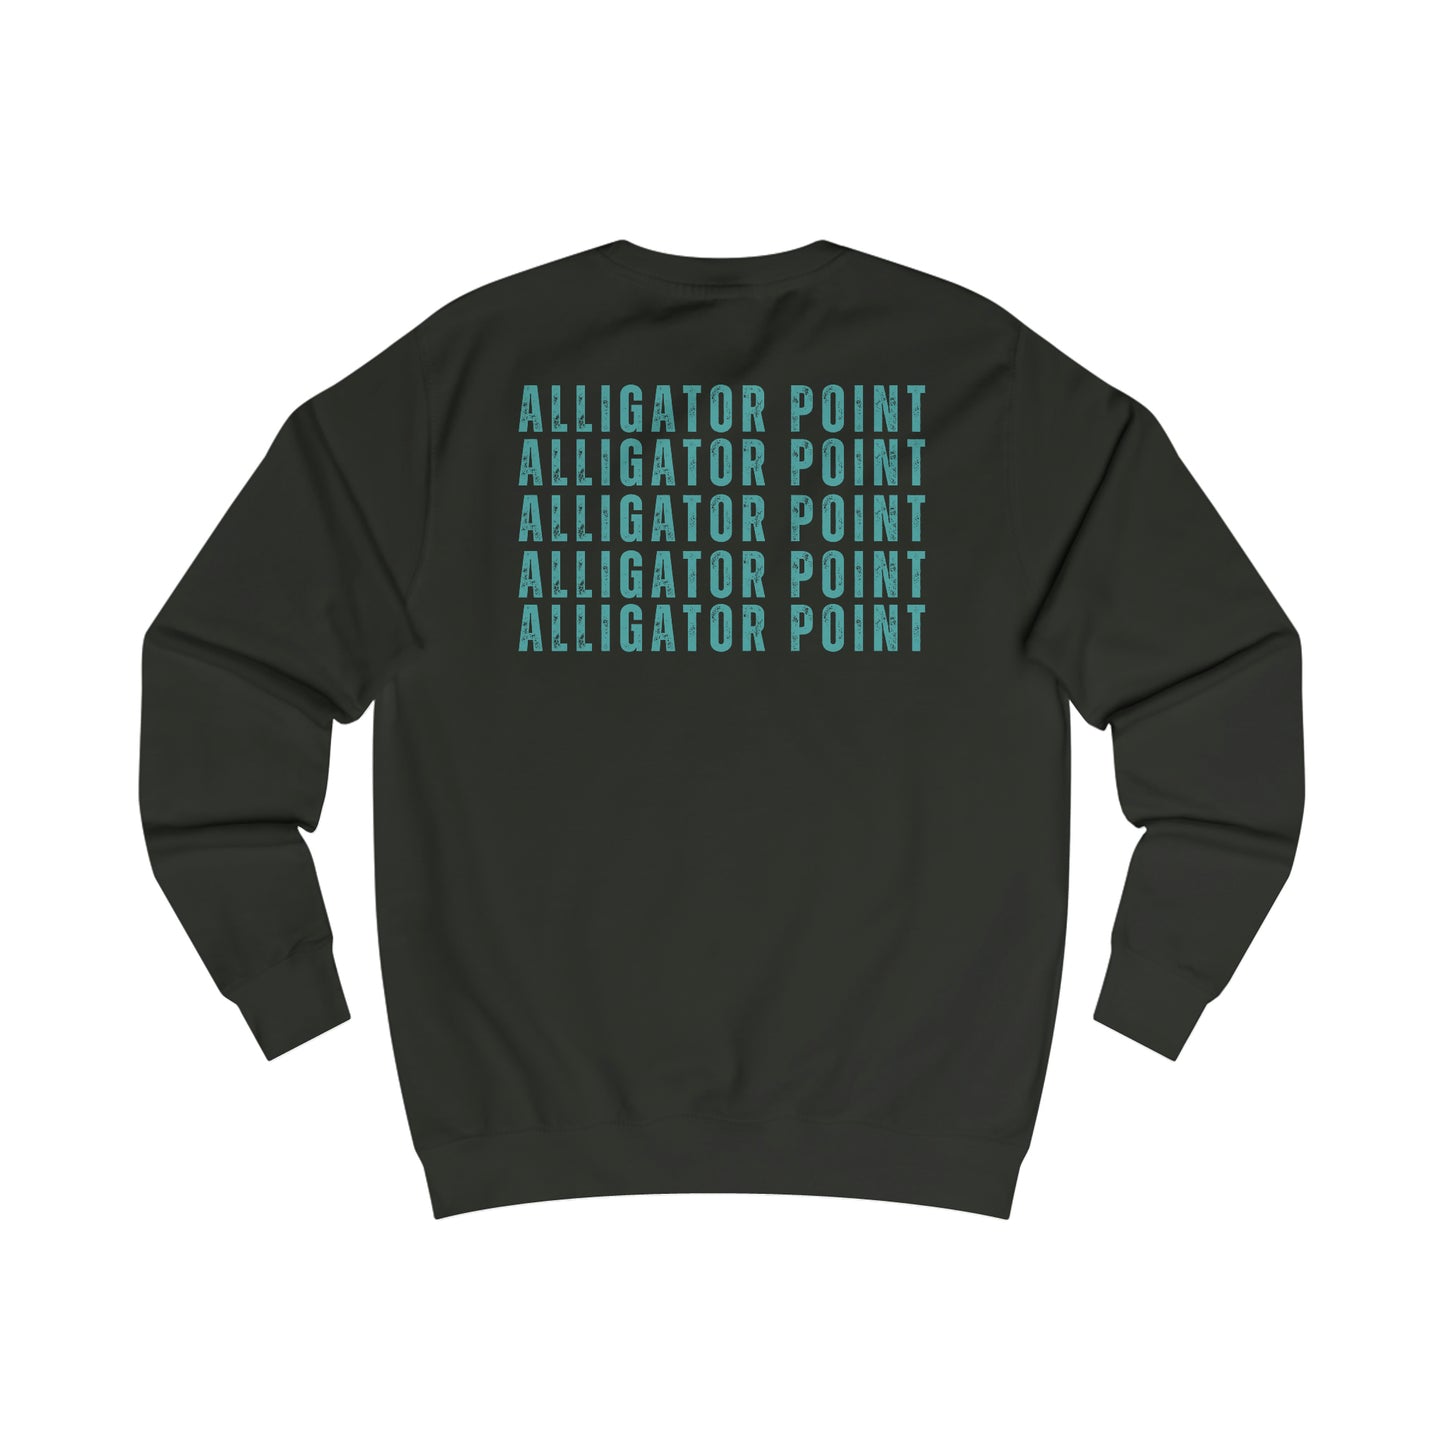 Alligator Point Blue Repeat Sweatshirt (Hoodless)